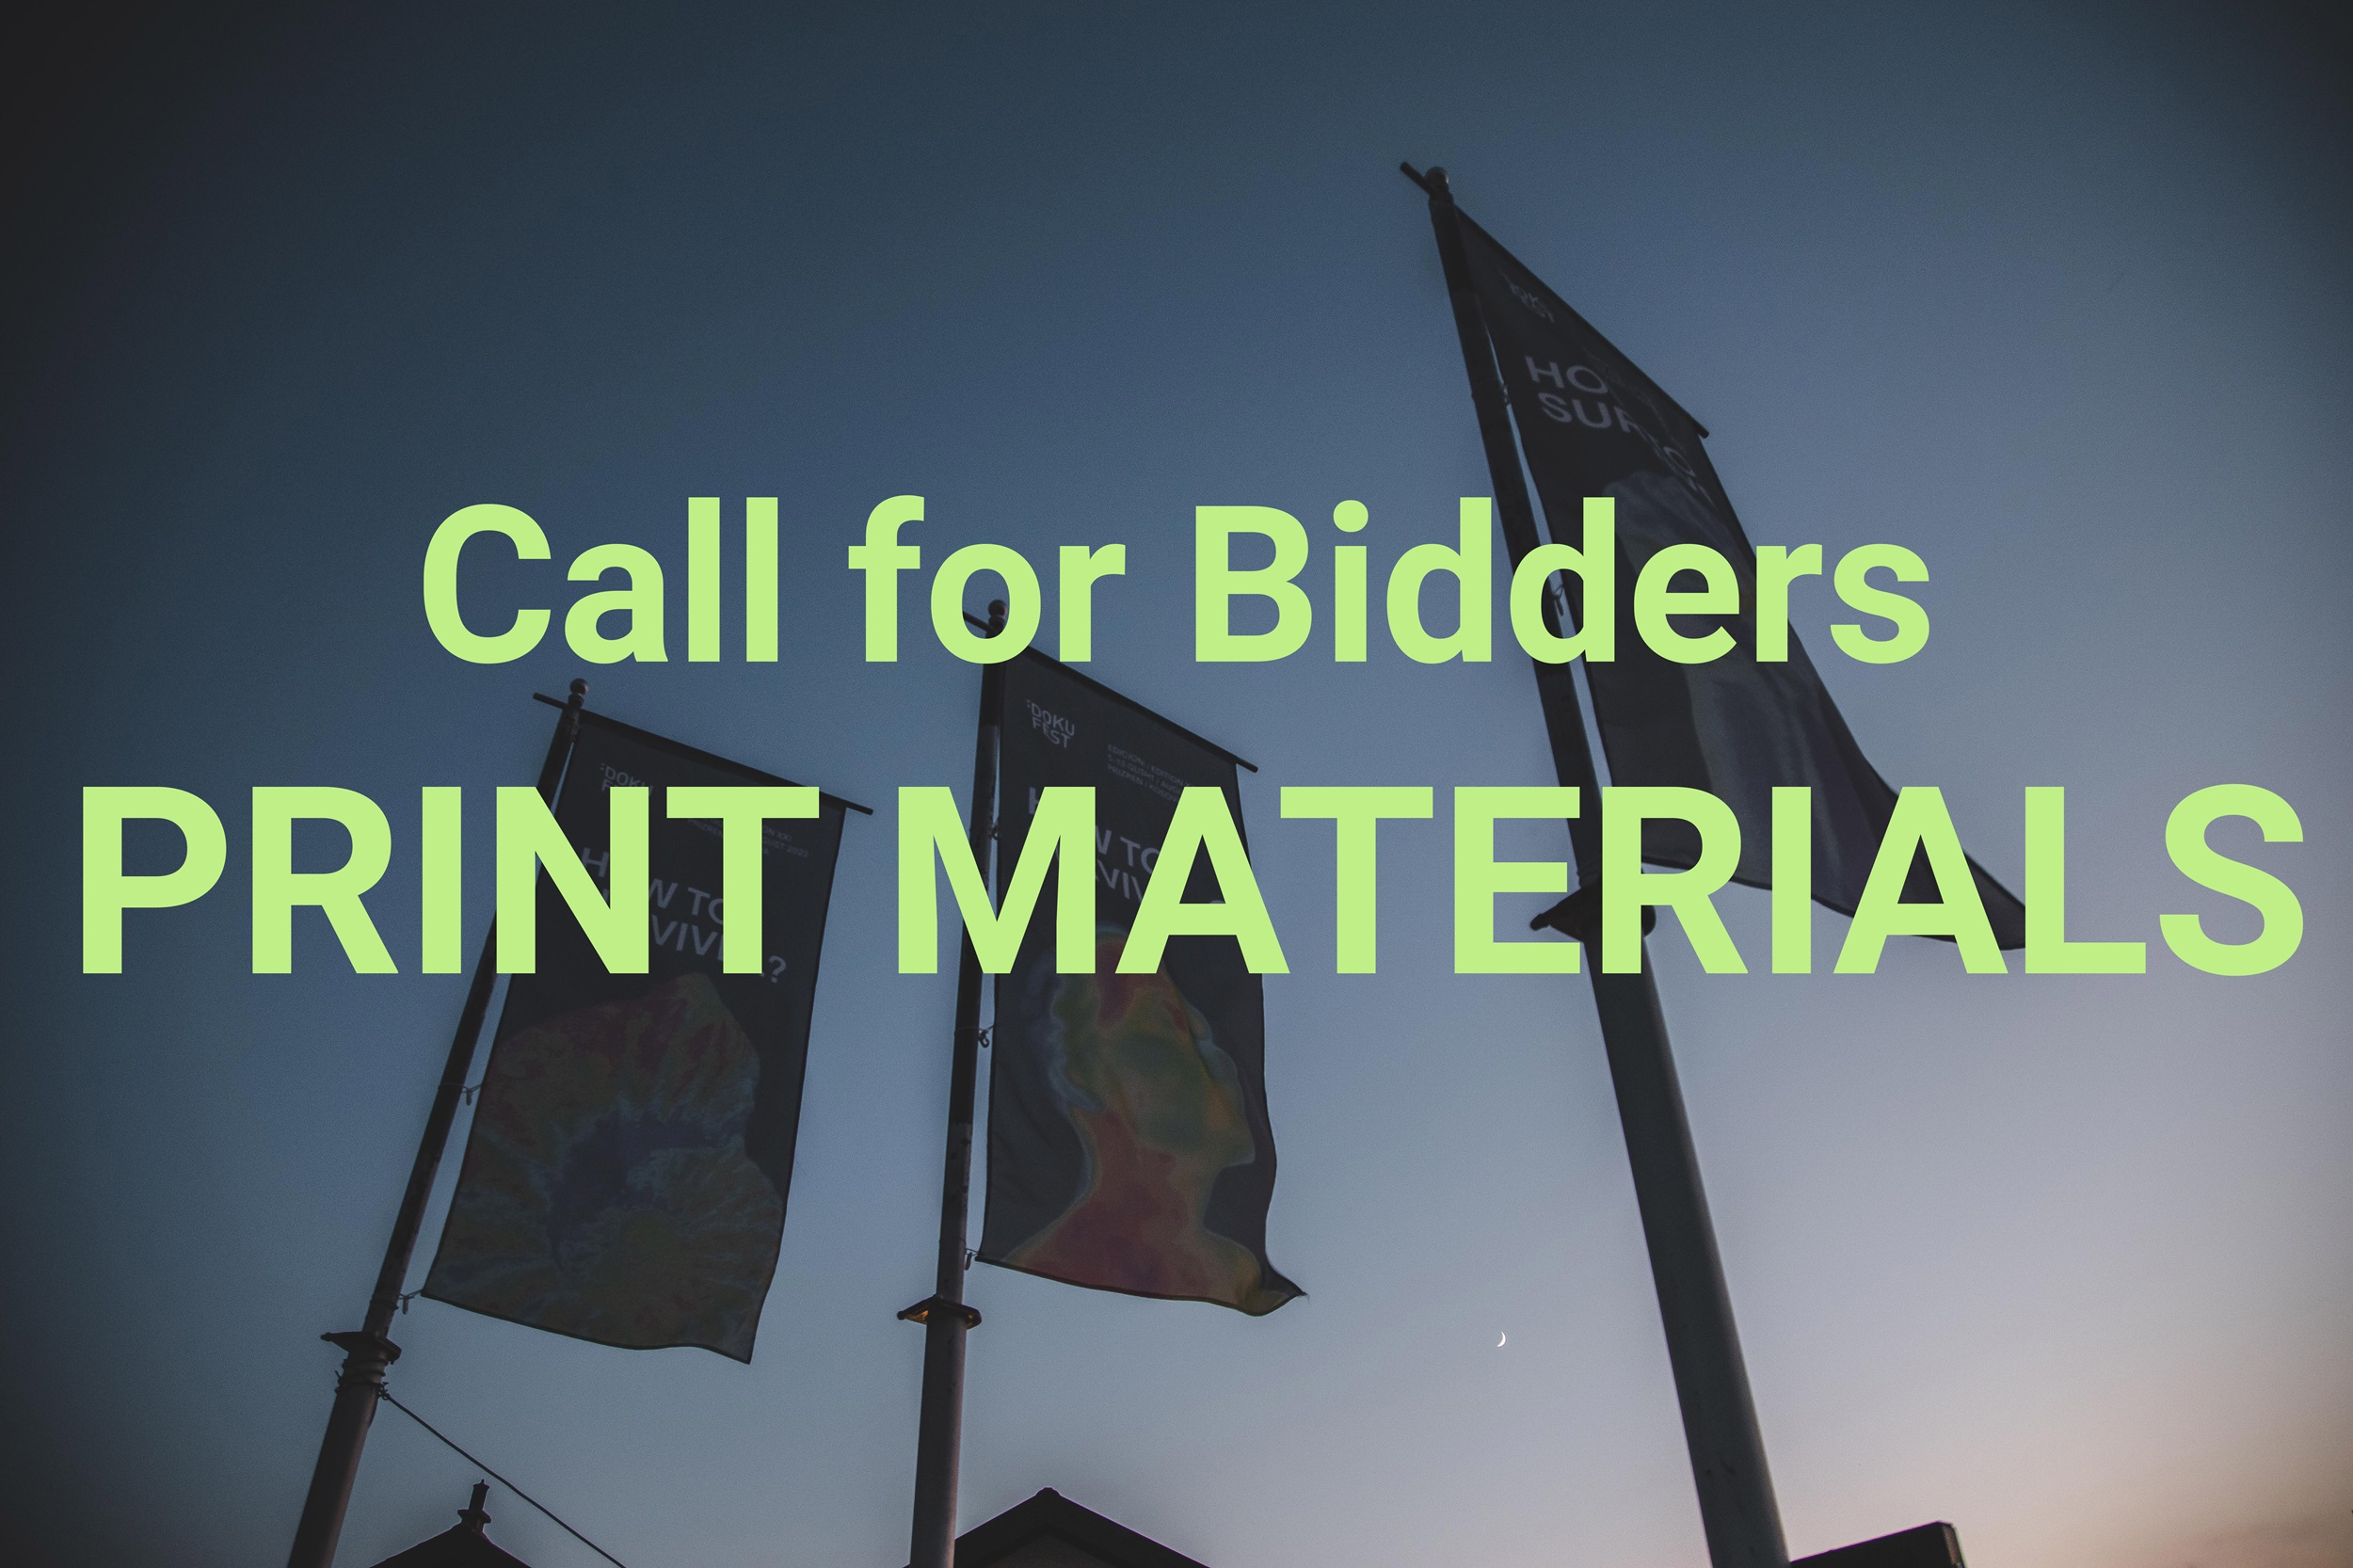 CALL FOR BIDDERS: Printing Materials